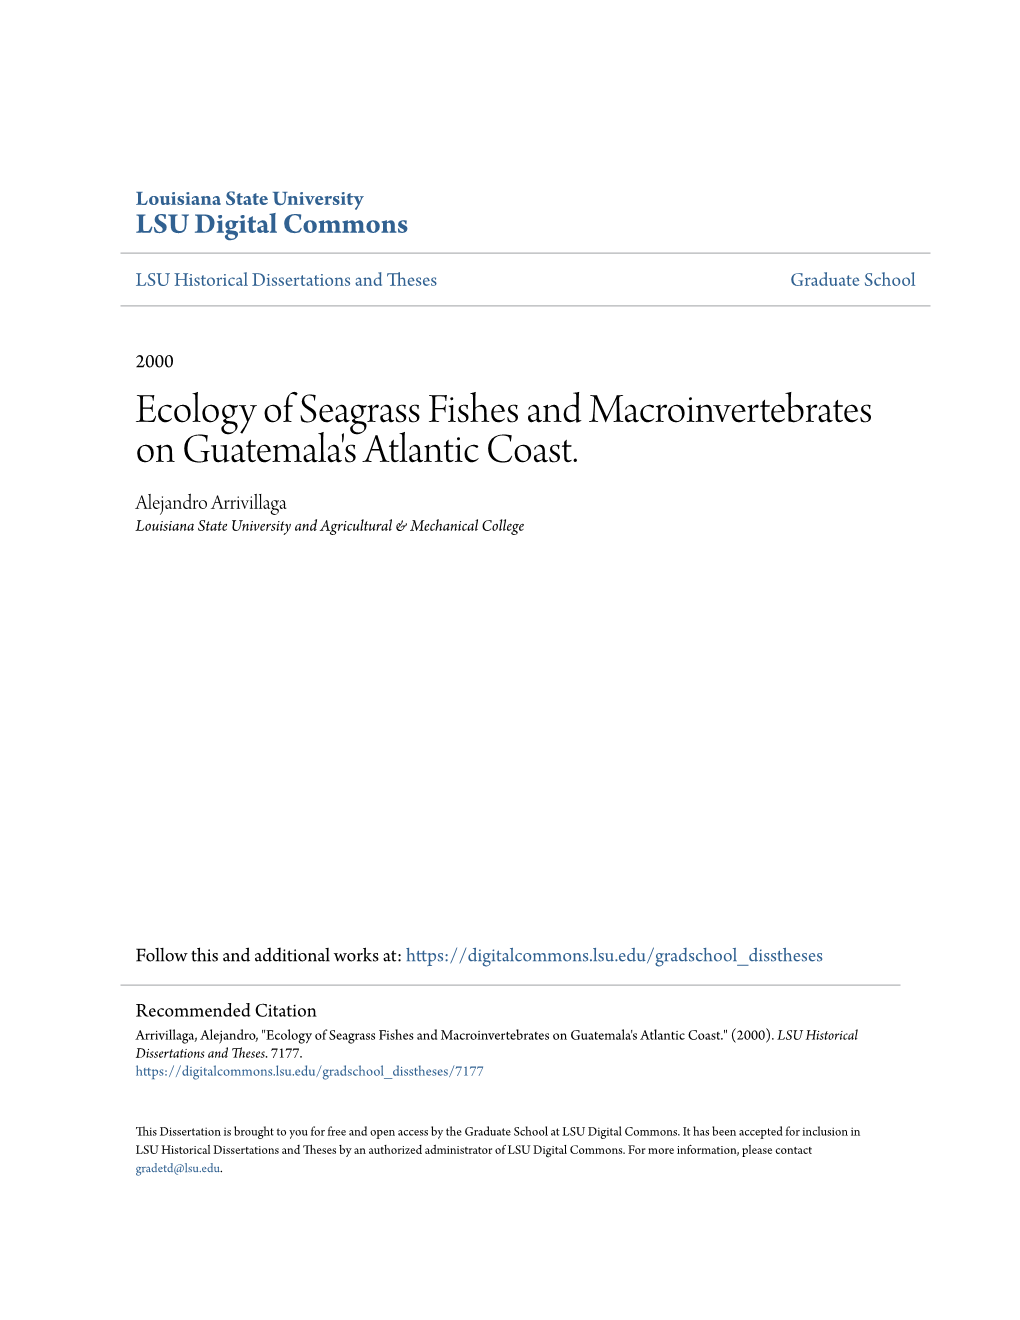 Ecology of Seagrass Fishes and Macroinvertebrates on Guatemala's Atlantic Coast